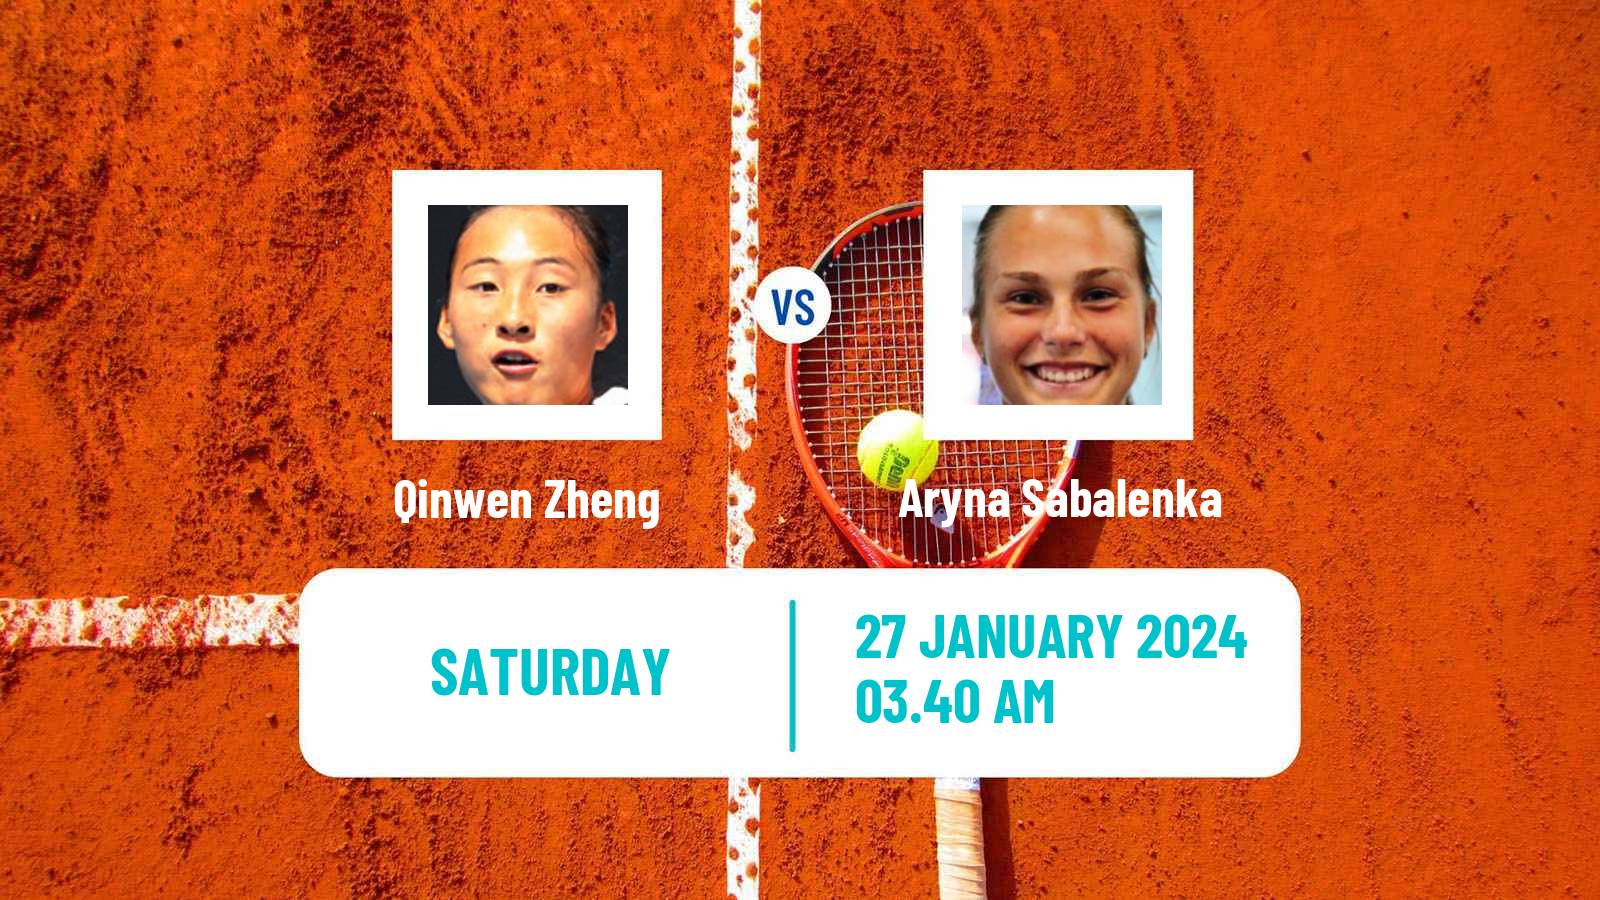 Tennis WTA Australian Open Qinwen Zheng - Aryna Sabalenka